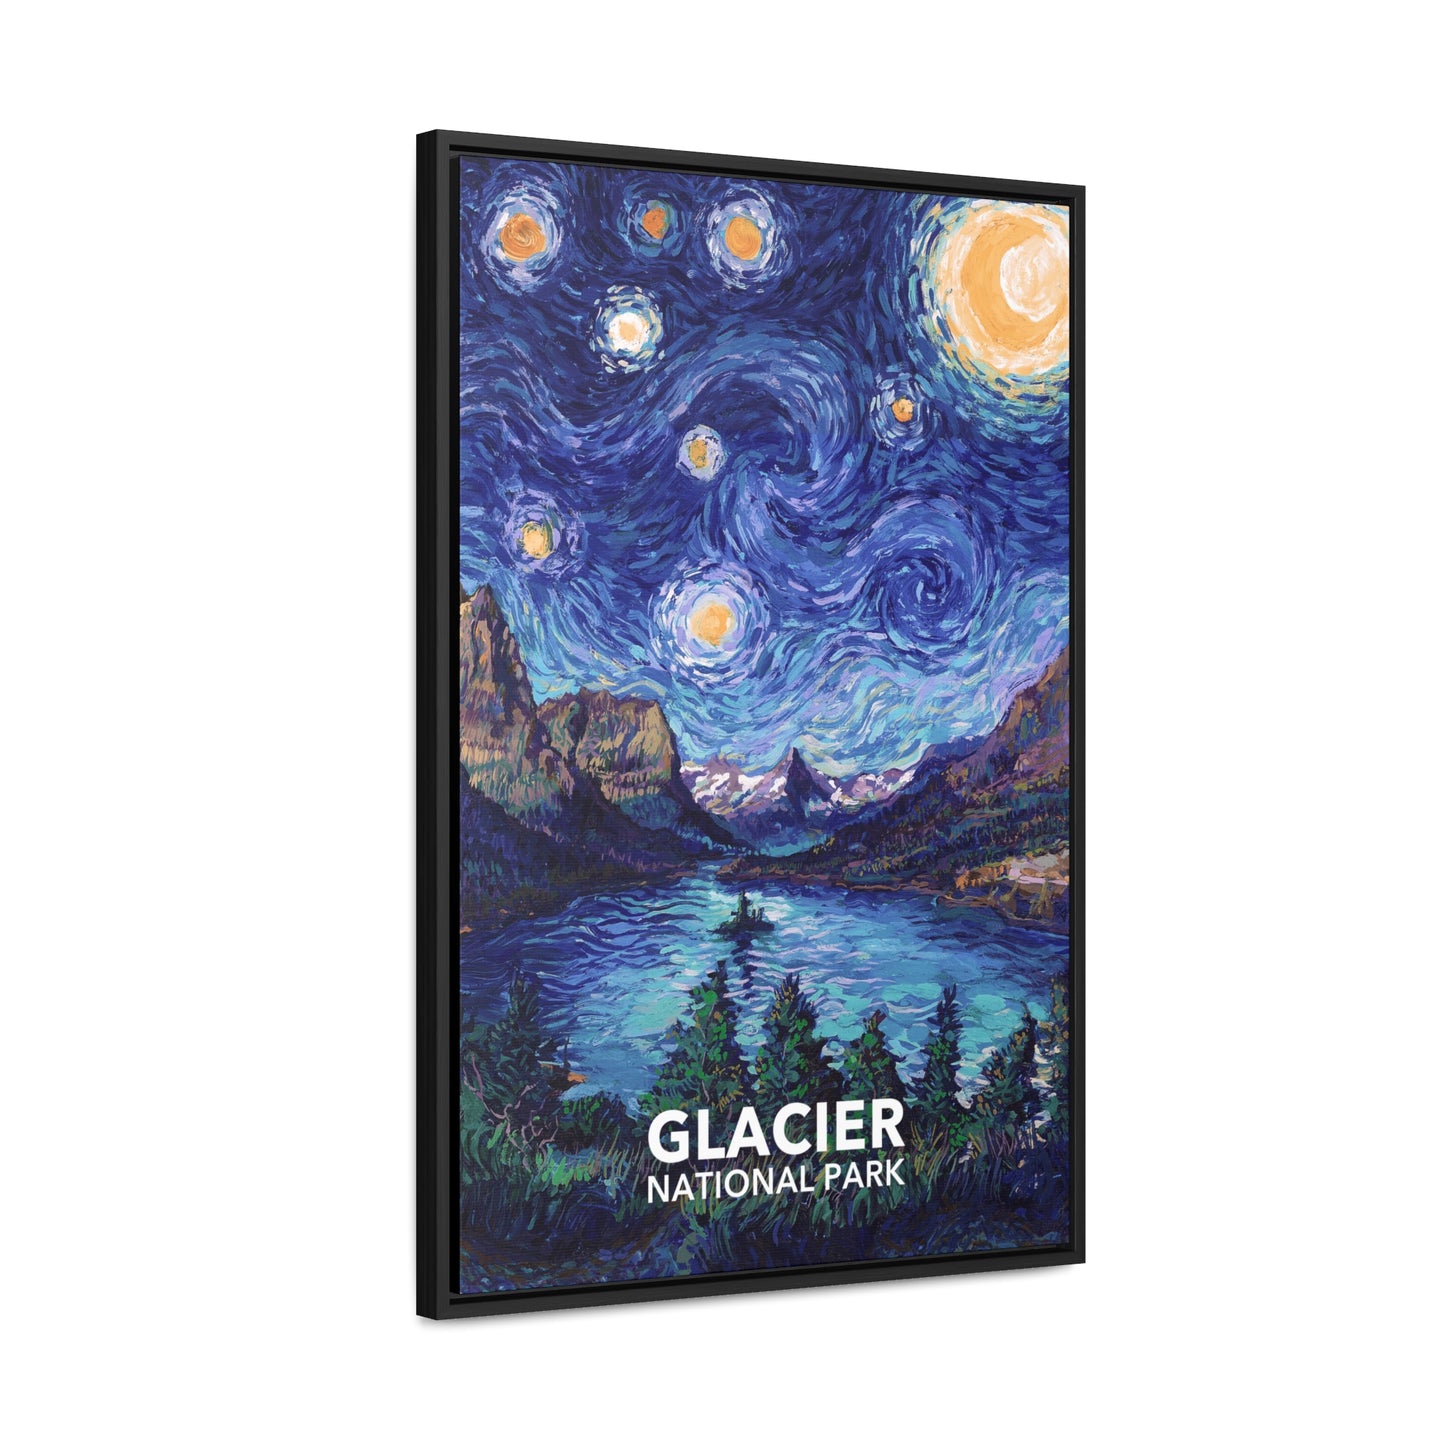 Glacier National Park Framed Canvas - The Starry Night